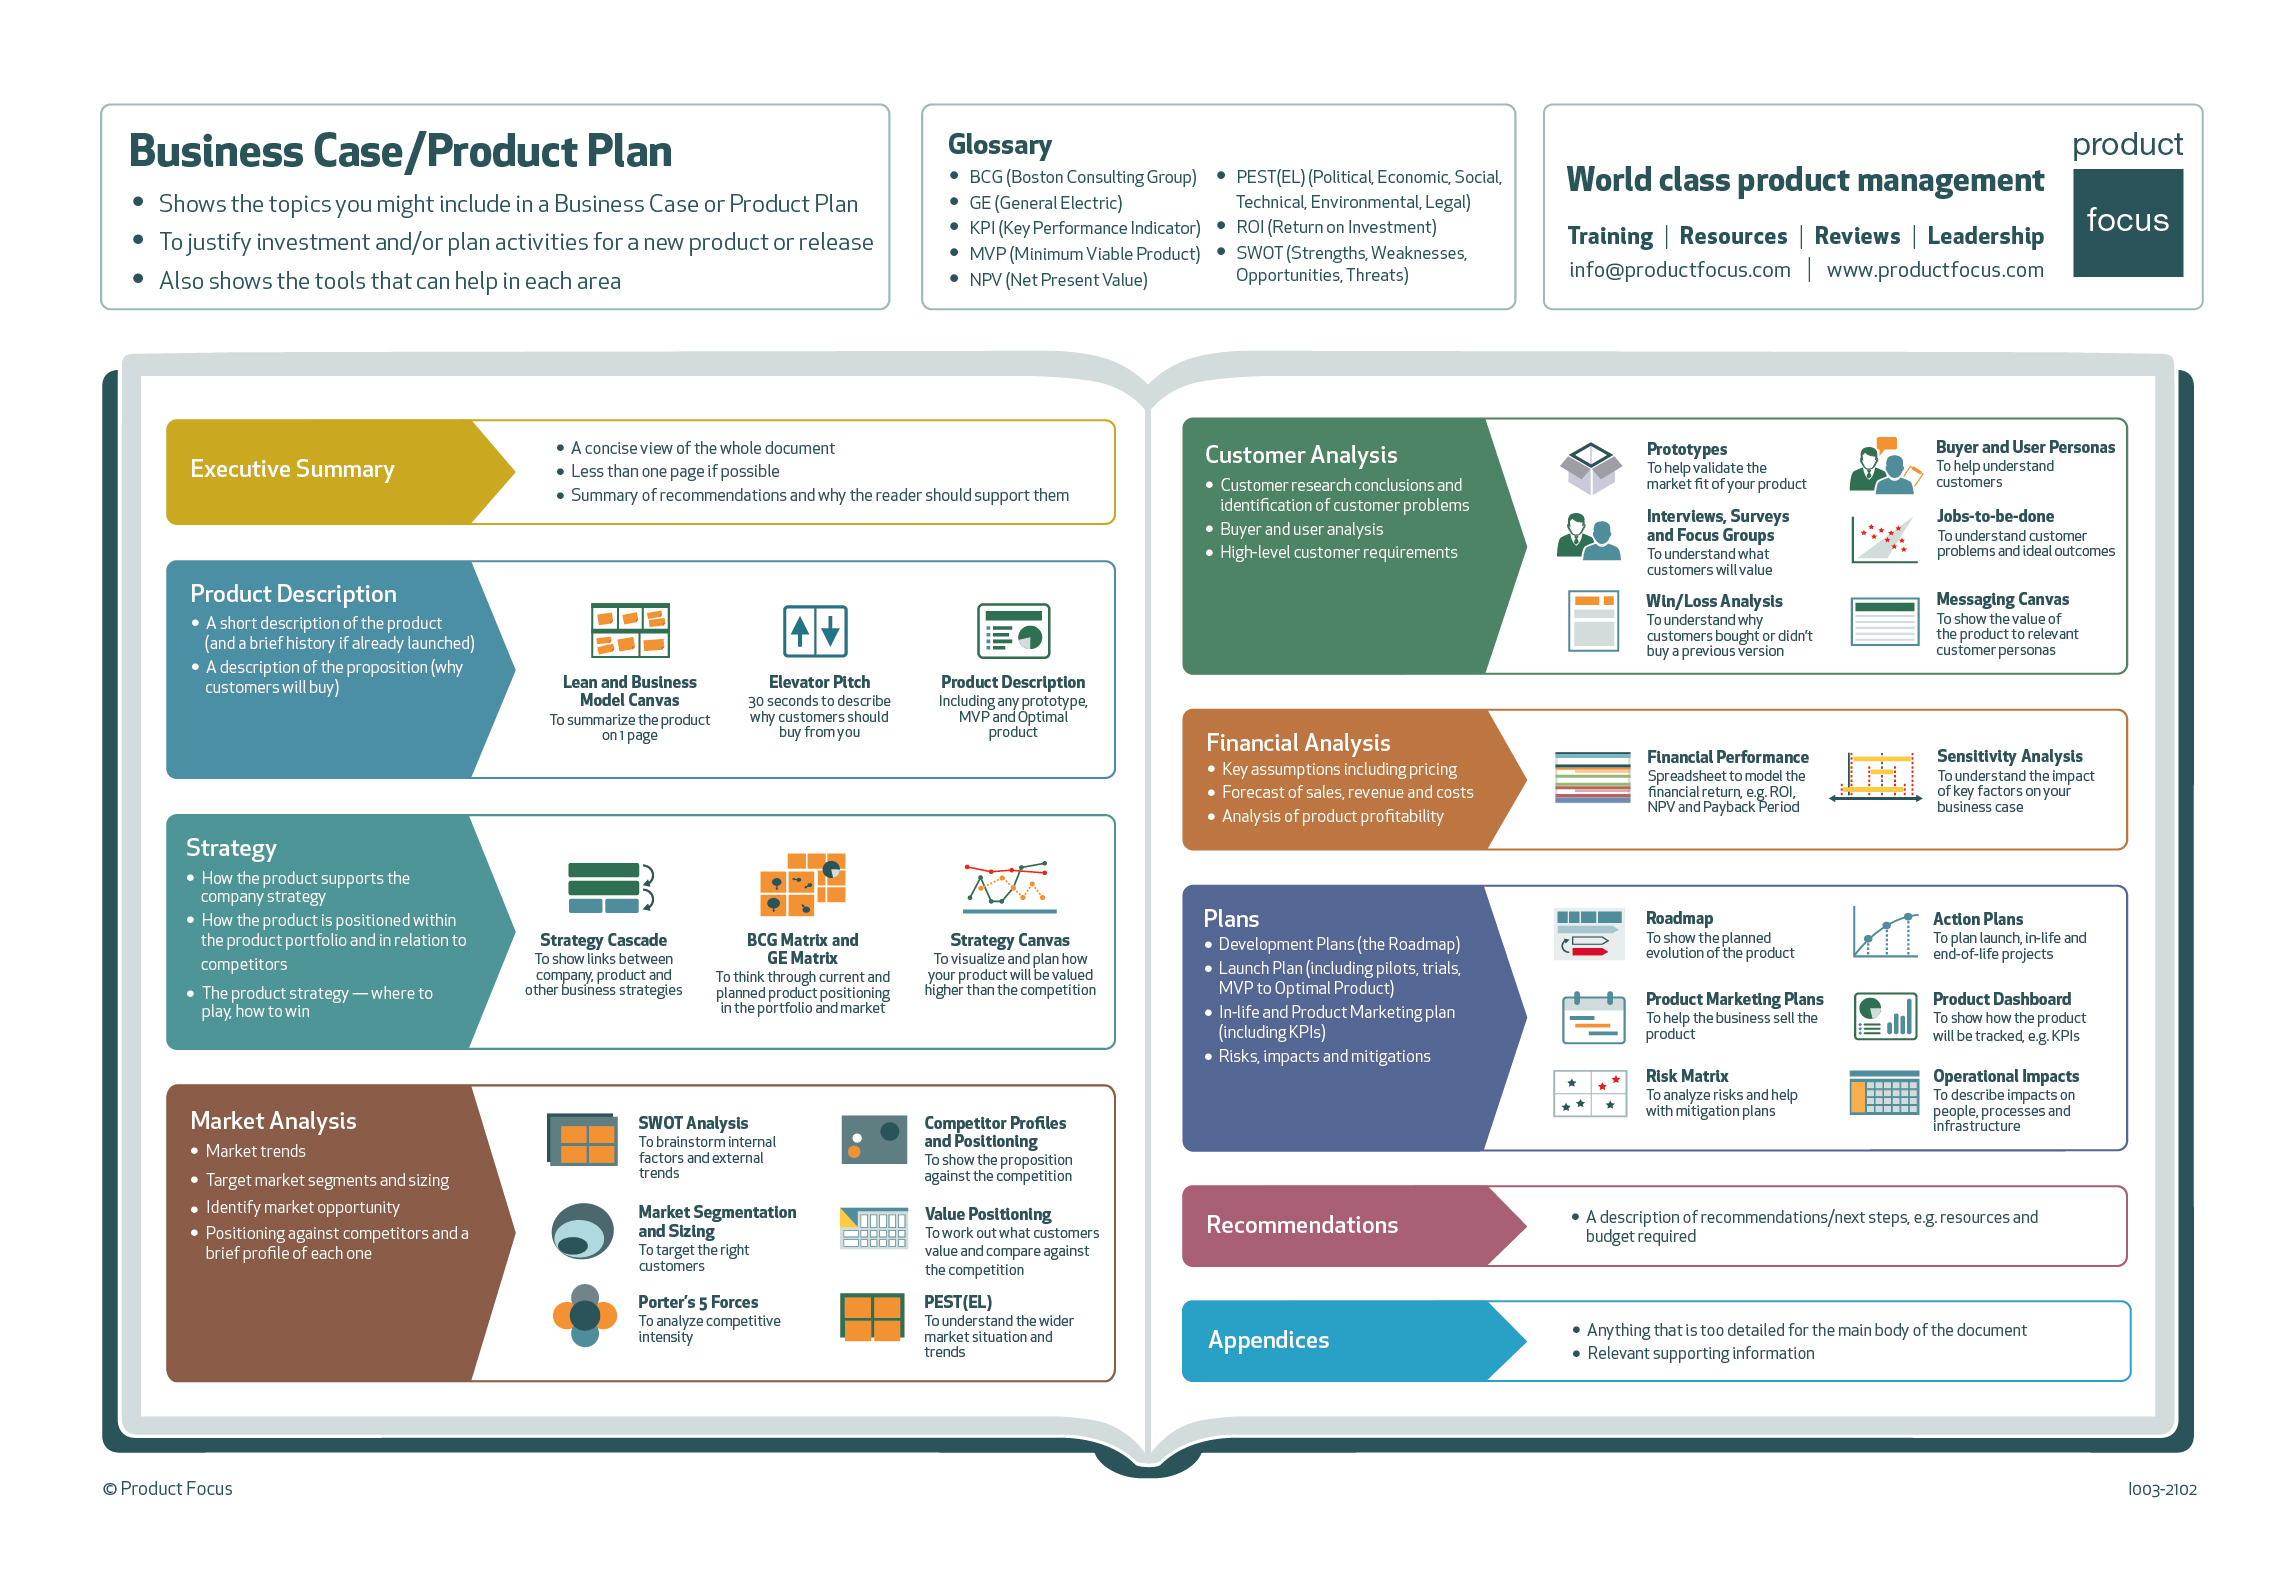 Product Management Business Case | Product Focus